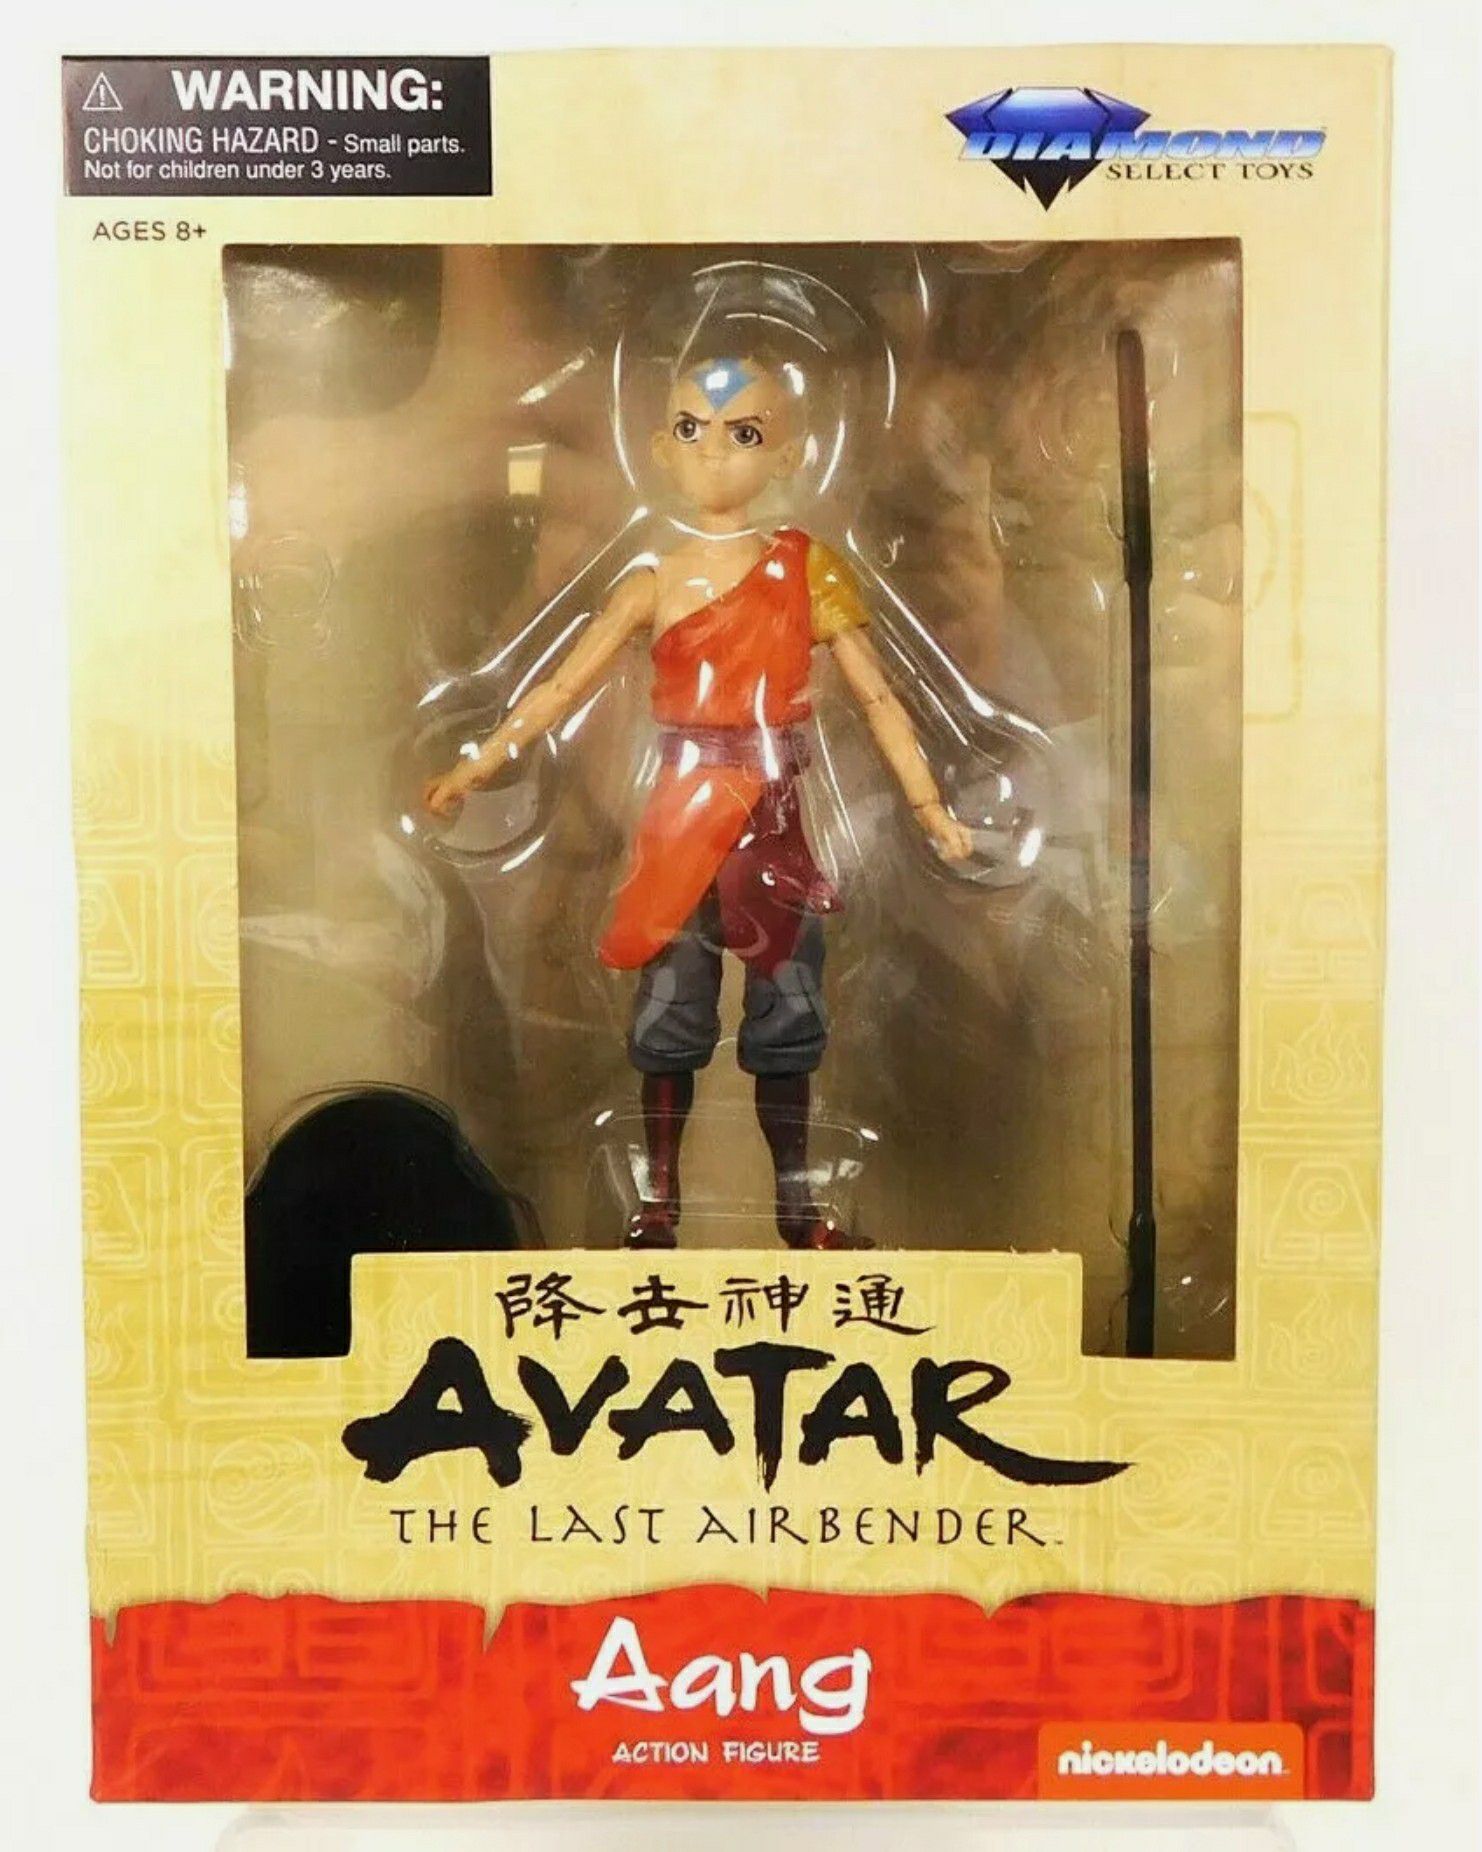 Avatar The Last Airbender Aang Action Figure by Nickelodeon